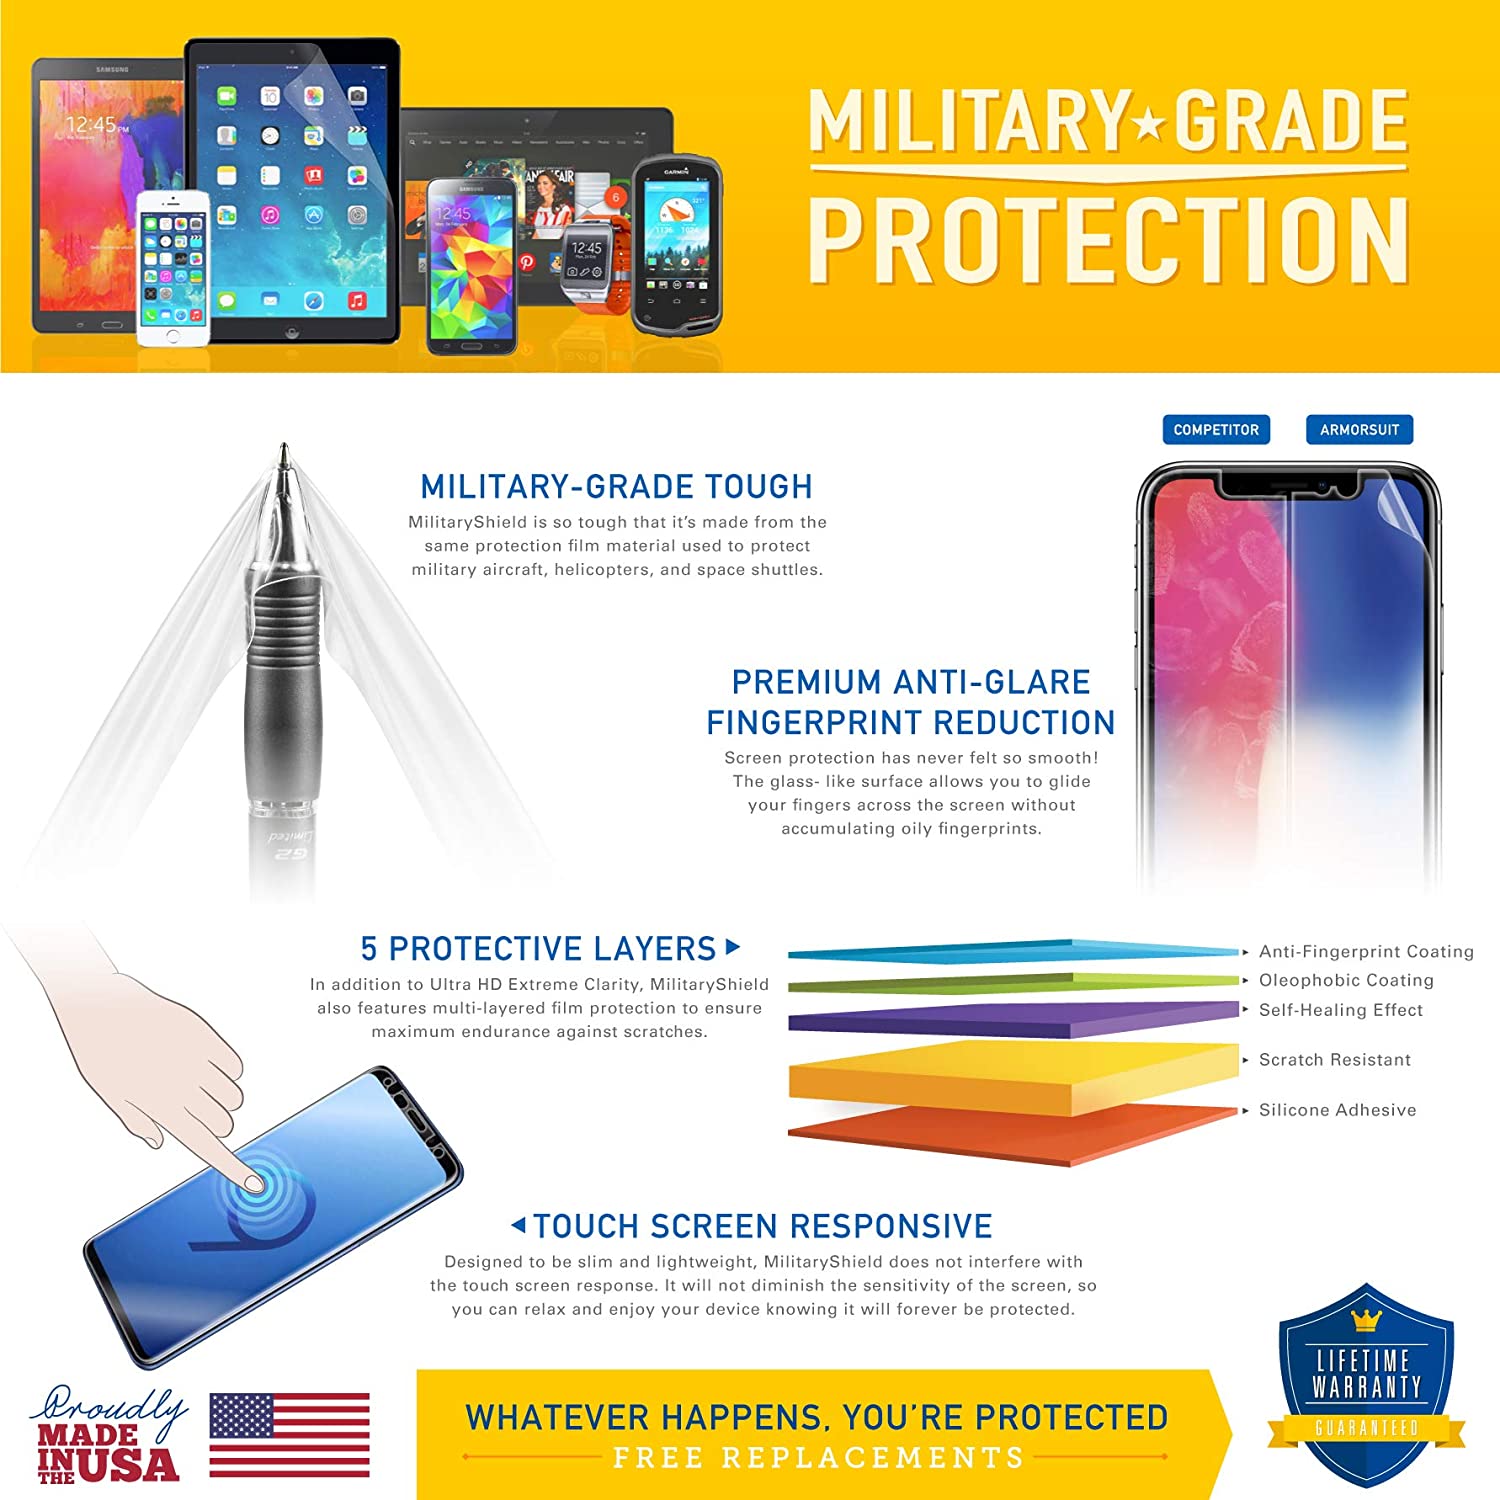 Samsung Galaxy TabPRO 12.2 Screen Protector + Black Carbon Fiber Film Protector